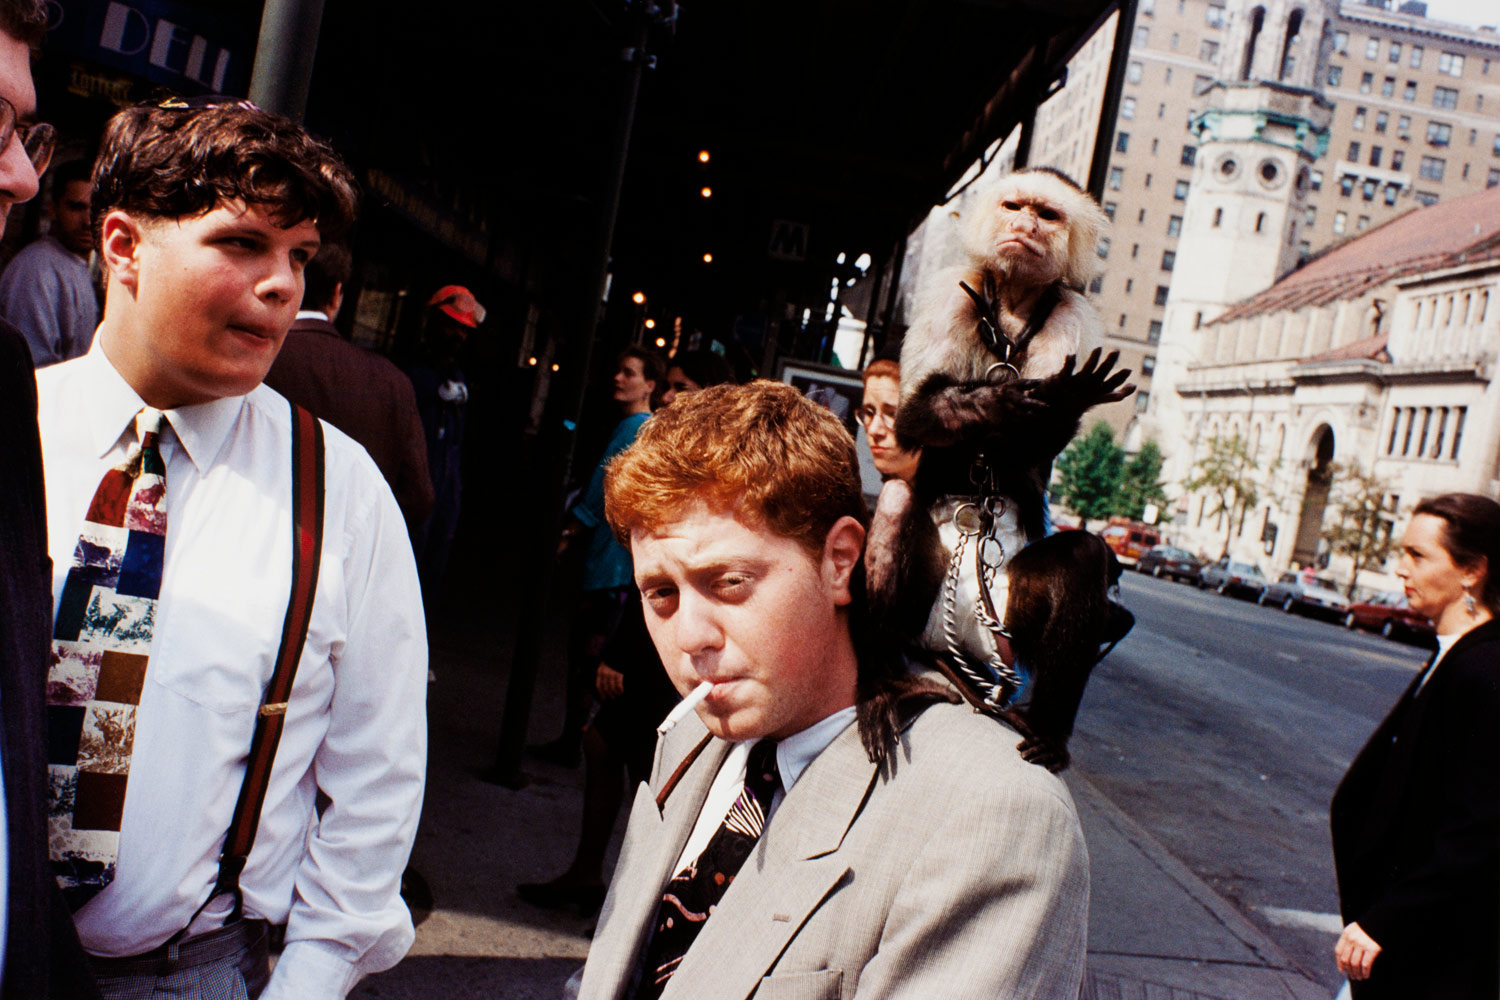 New York City, c. 1993-1997. Red head man smoking ciggarette